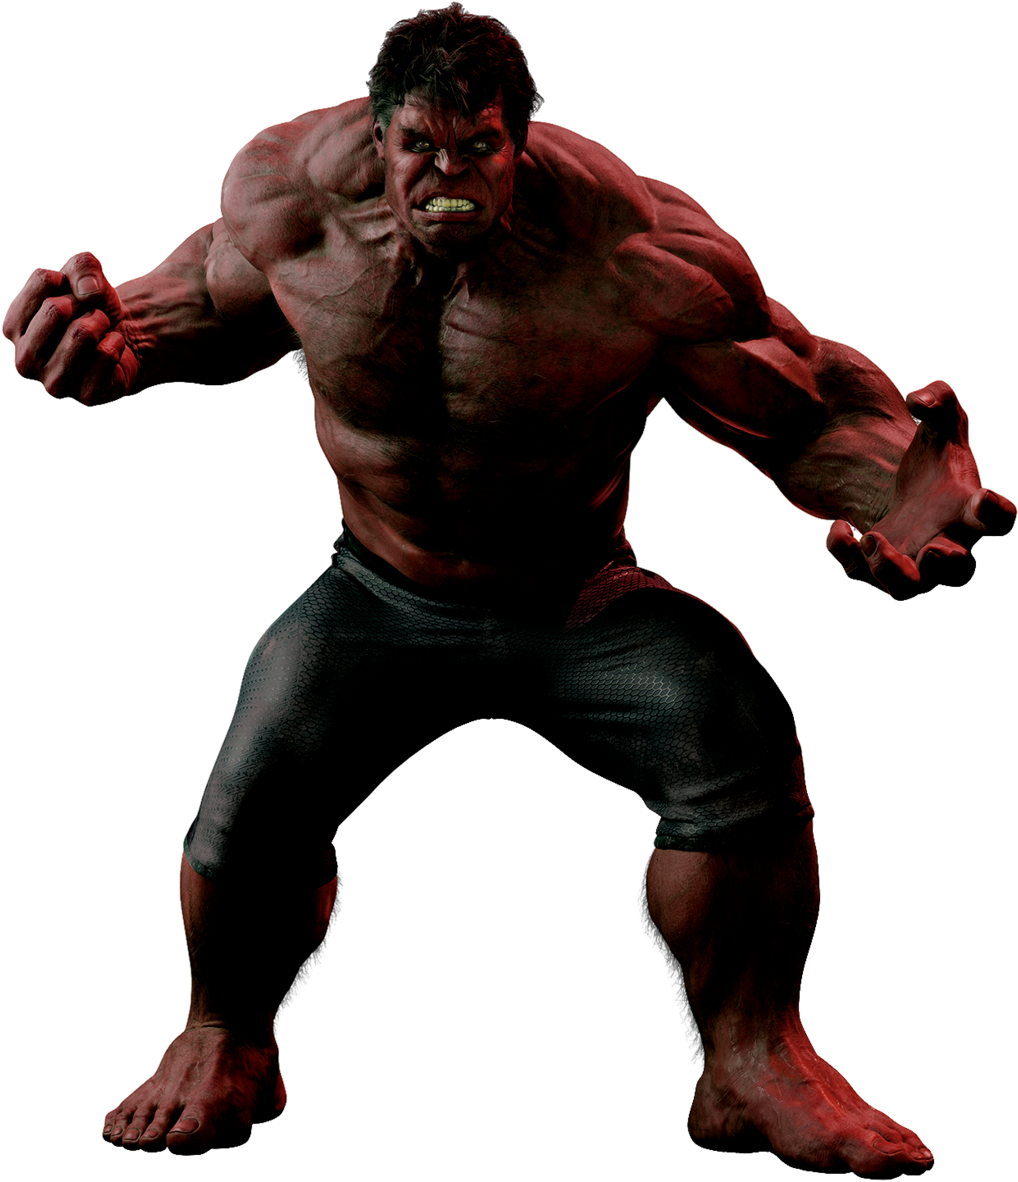 Red Hulk PNG